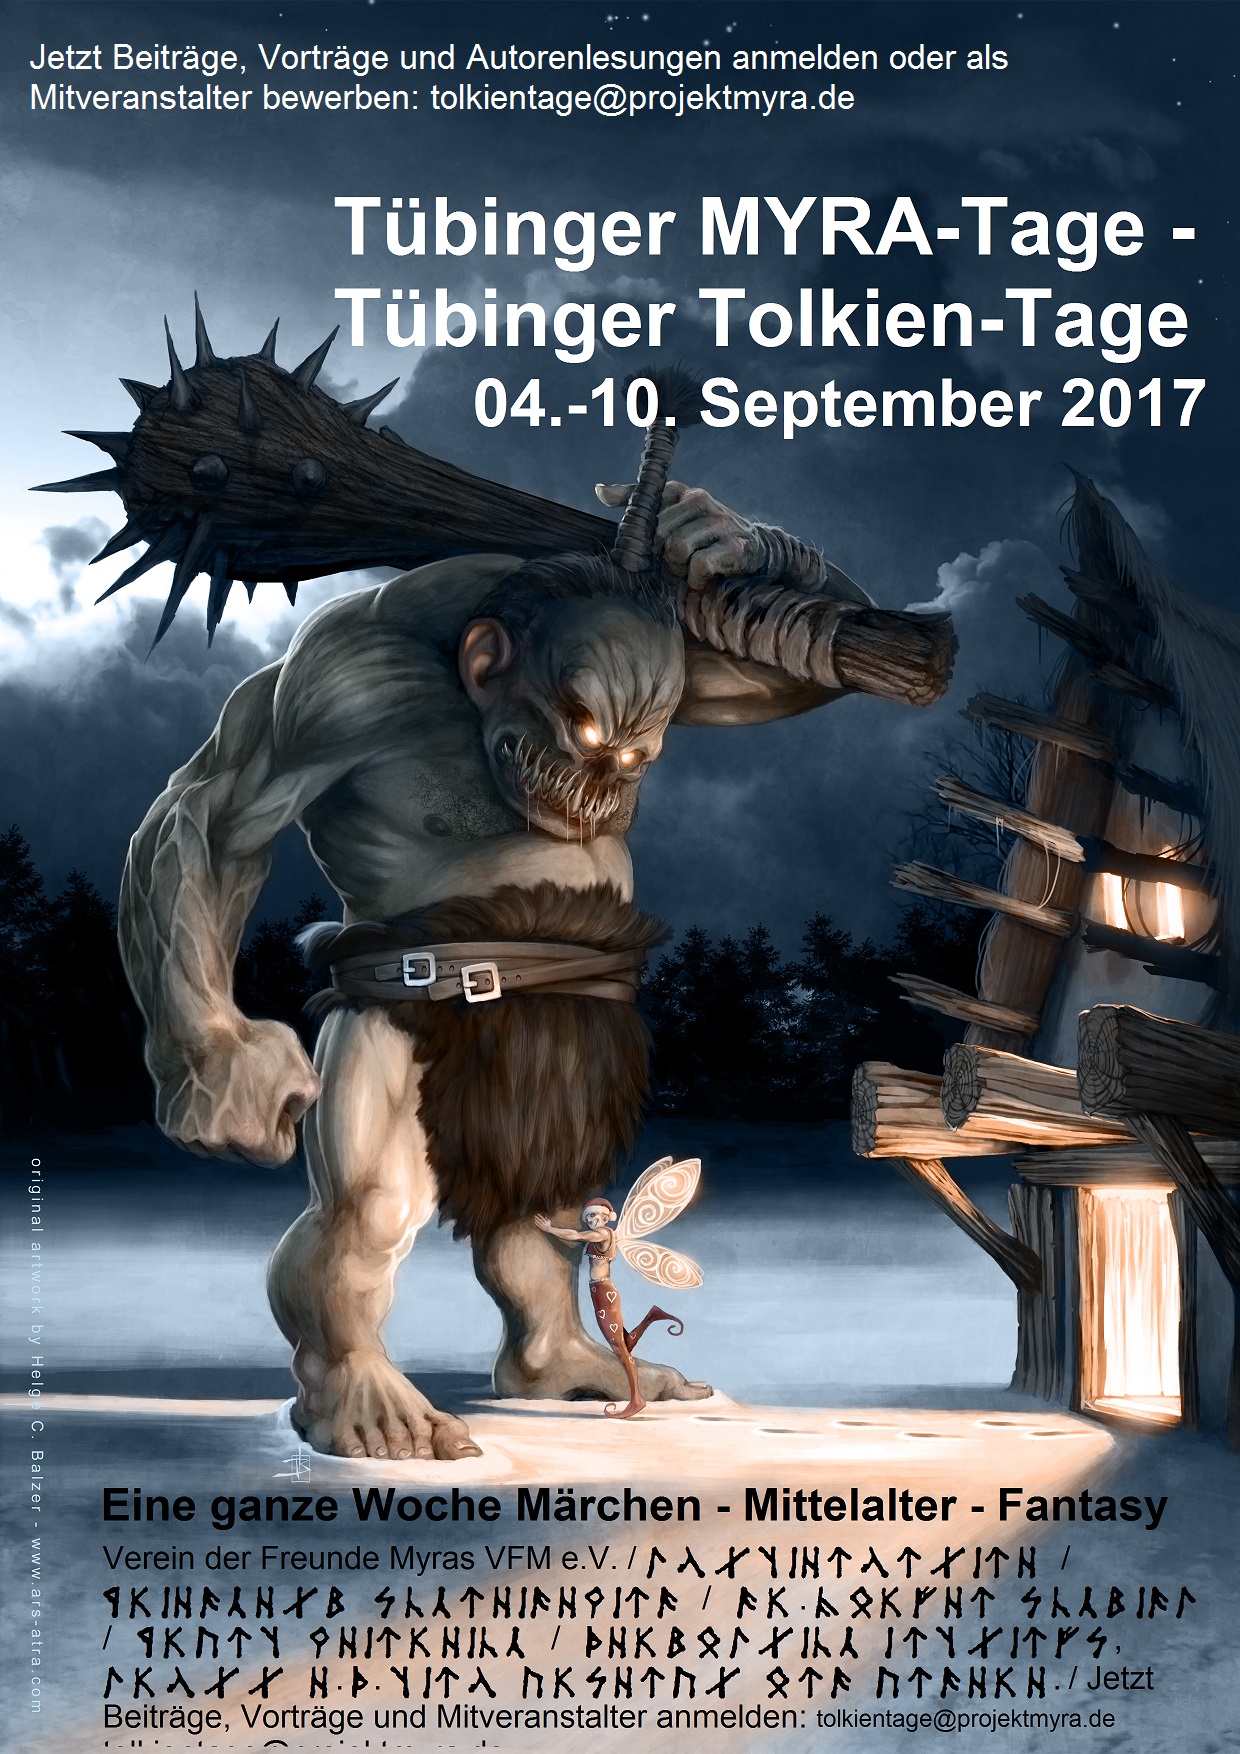 Tübinger Tolkien-Tage 2017